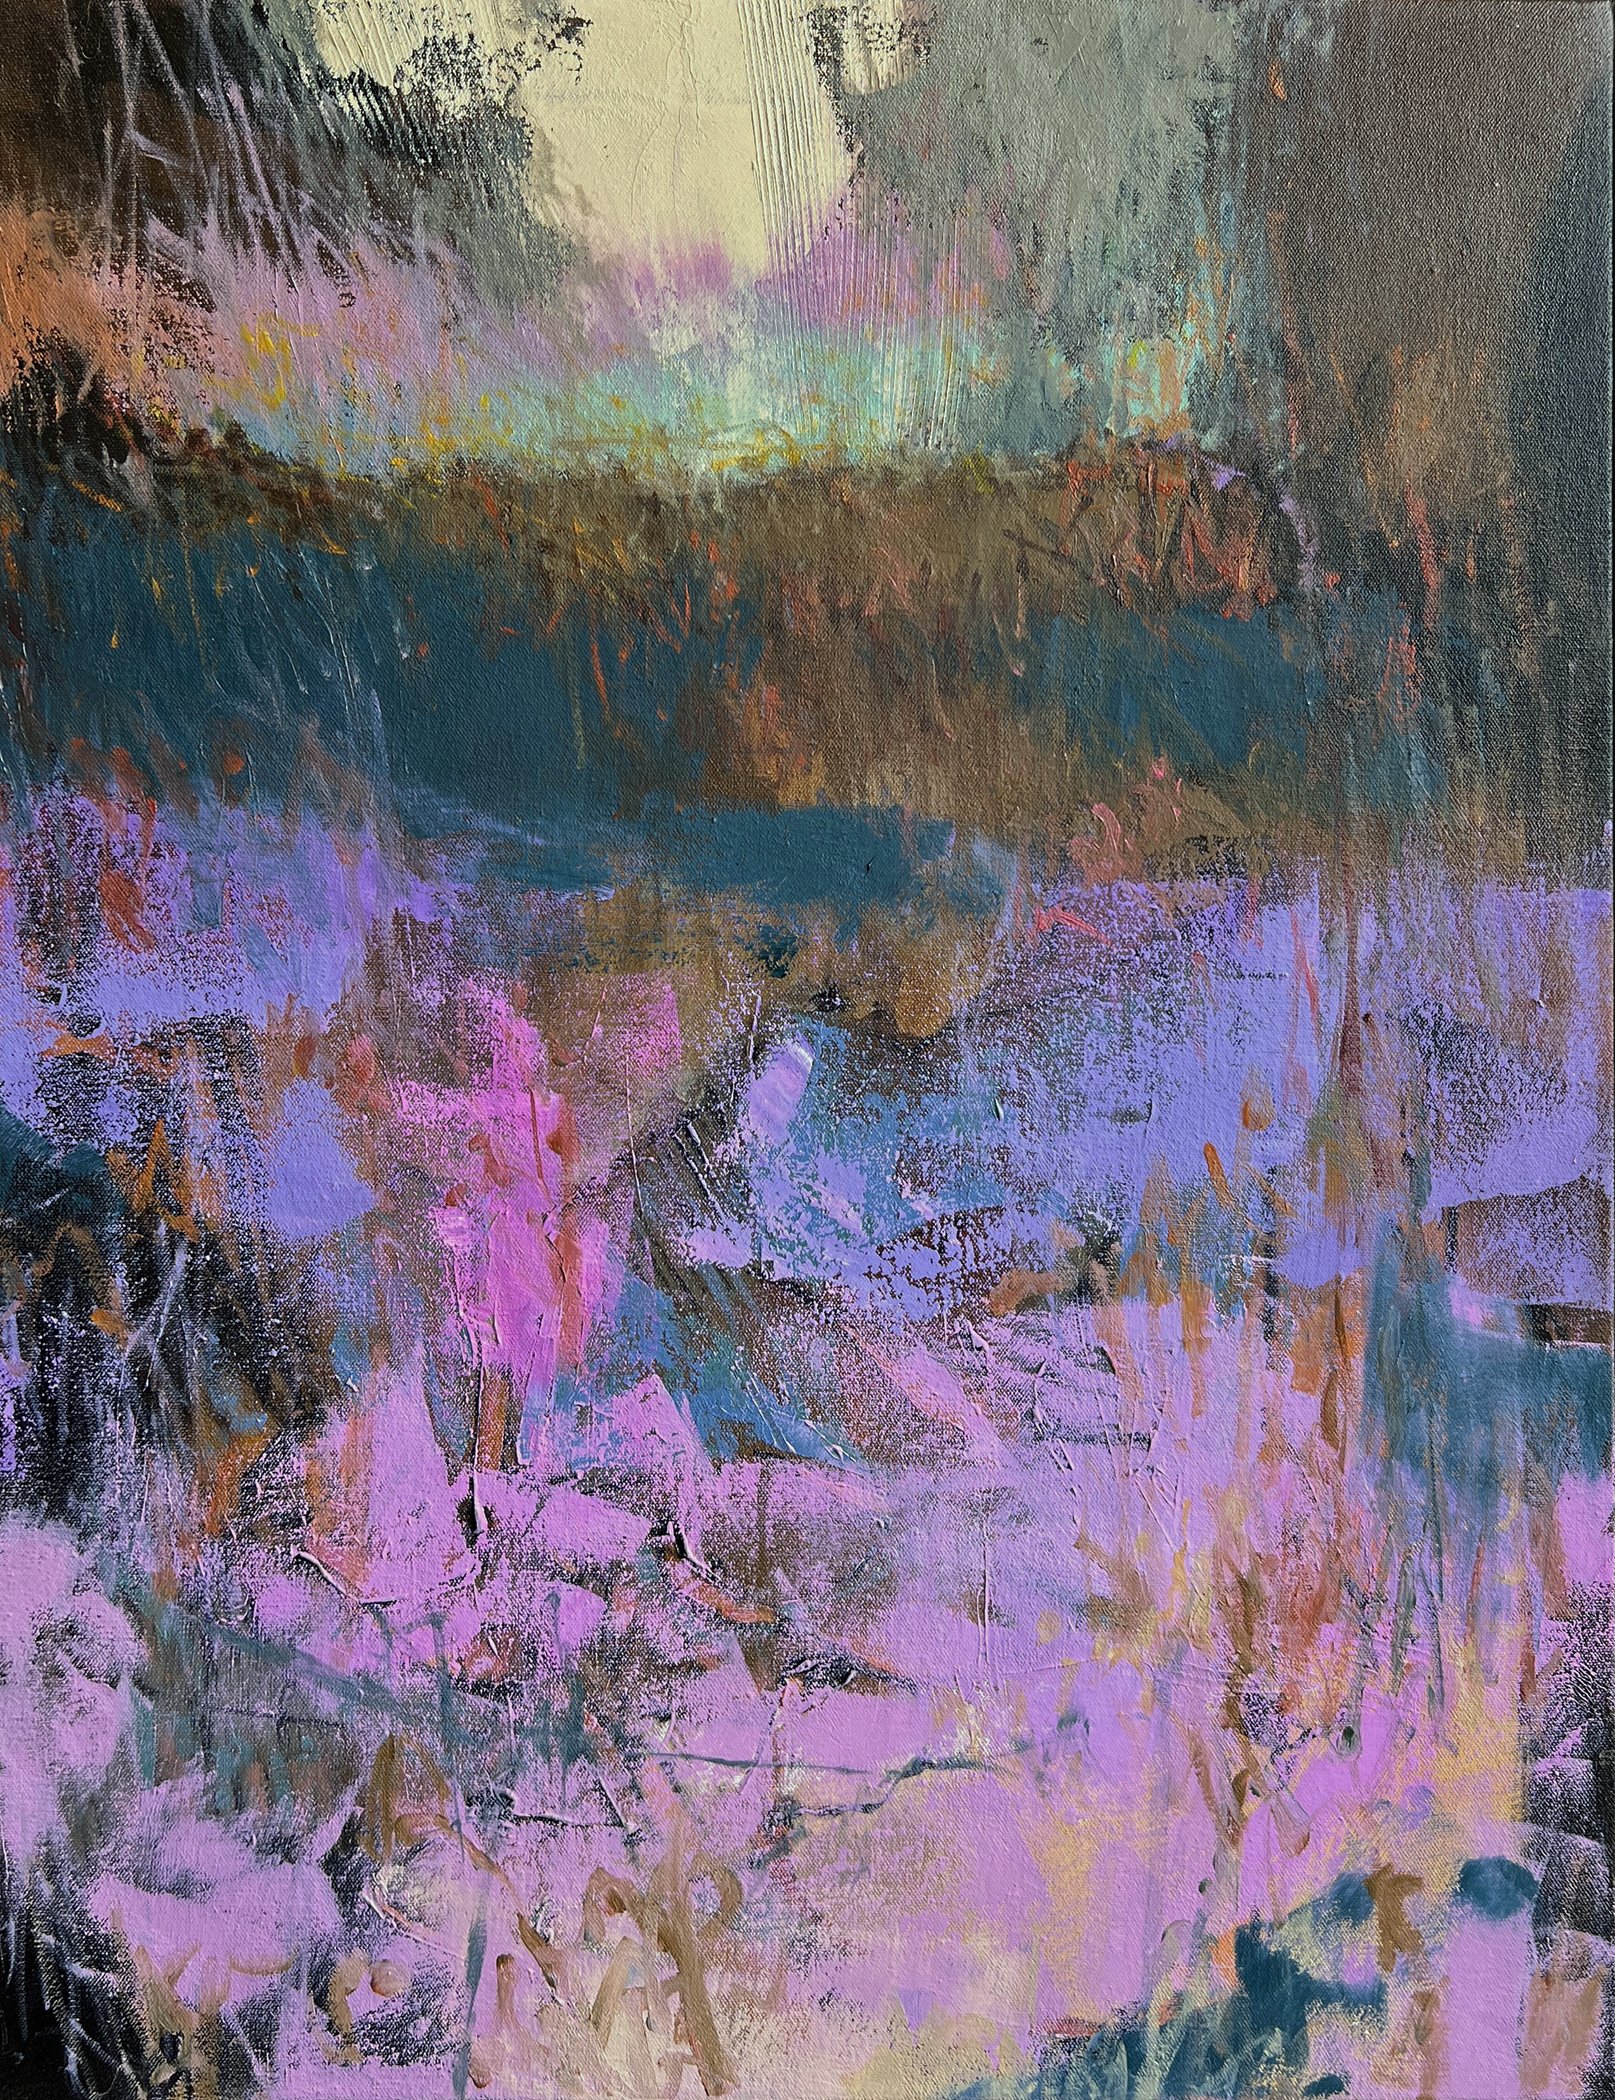    Lavender Fields   oil on canvas 26” x 20” x .75”  PRICE: $1050  